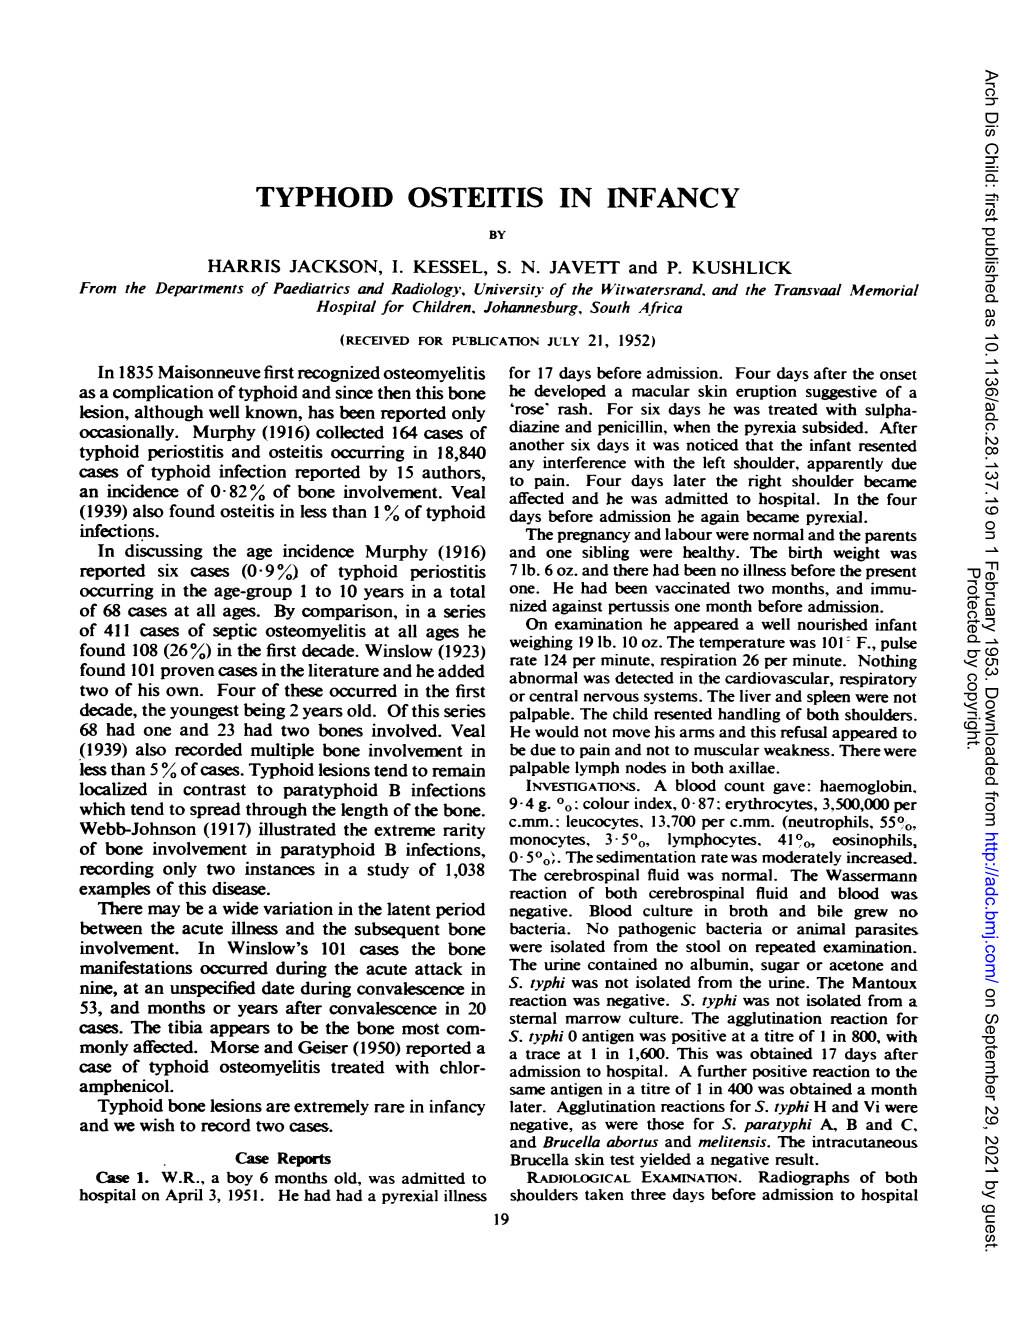 Typhoid Osteitis in Infancy